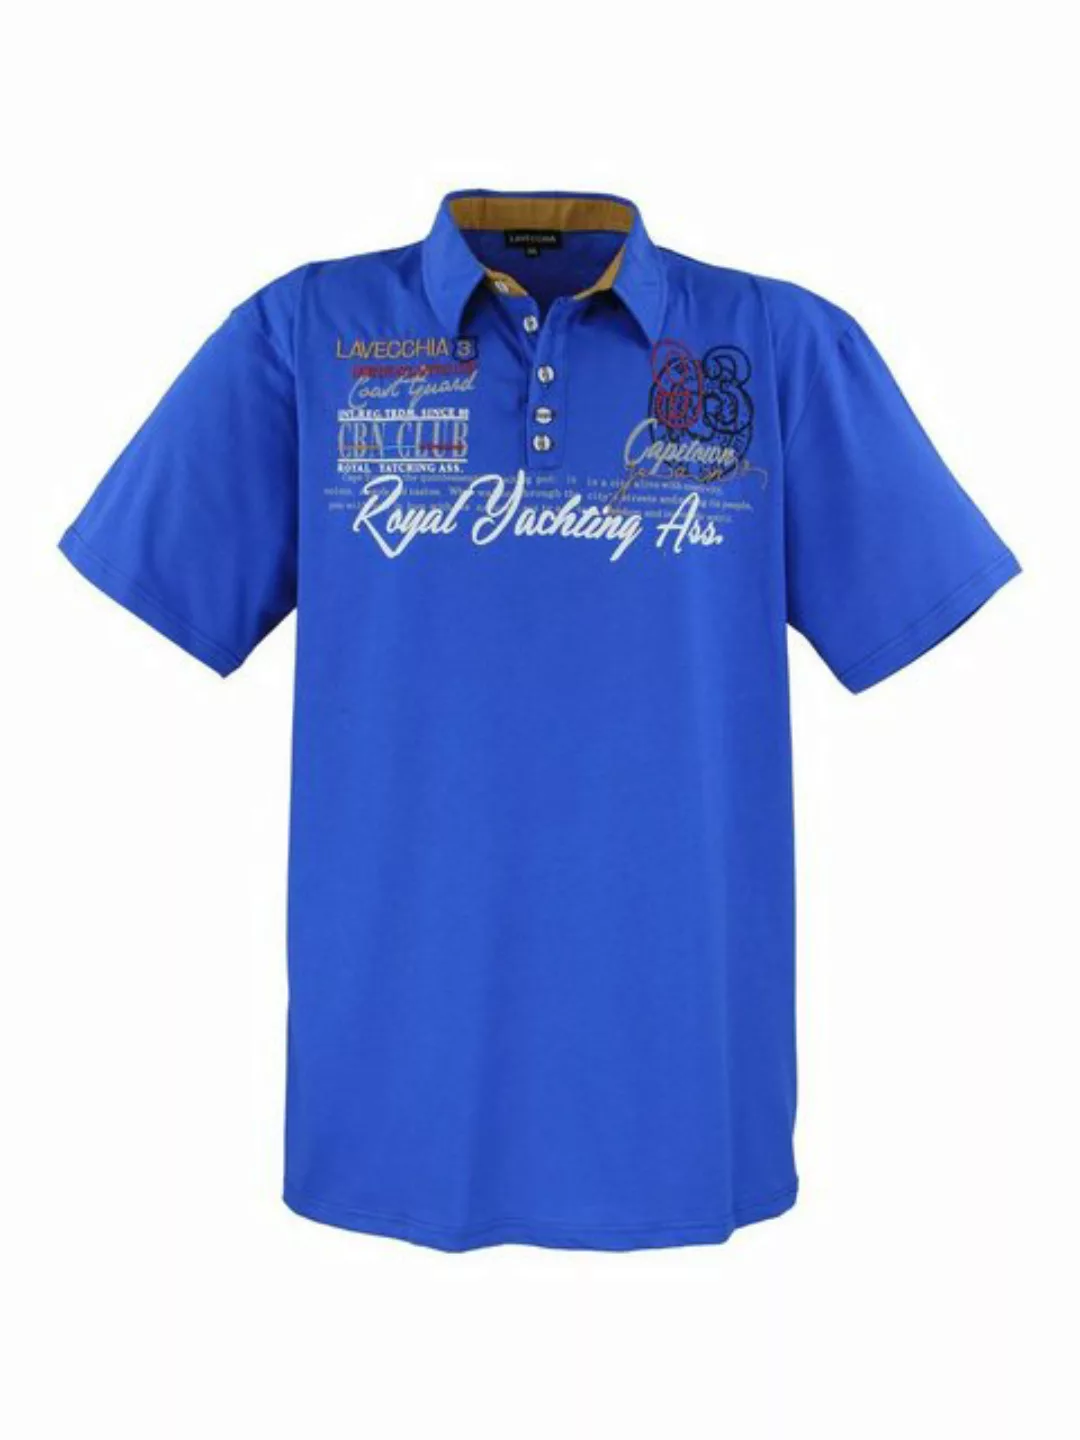 Lavecchia Poloshirt Übergrößen Herren Polo Shirt LV-4688 Herren Polo Shirt günstig online kaufen